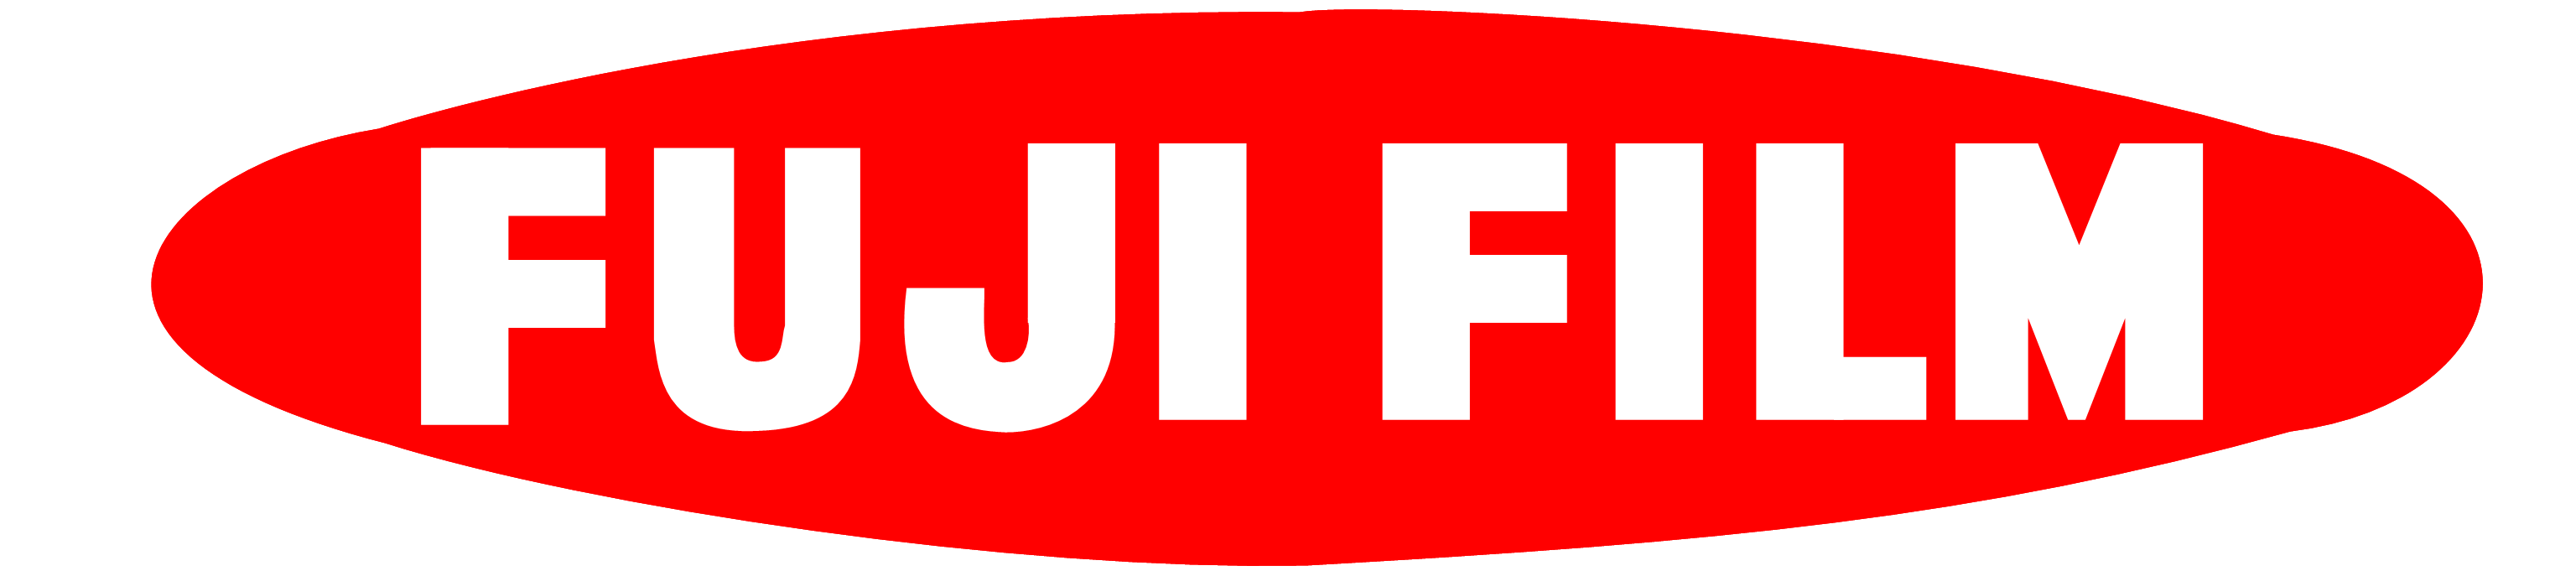 Old Fujifilm Logo - Snap Fuji Television Logo Fujifilm Logopedia photos on Pinterest